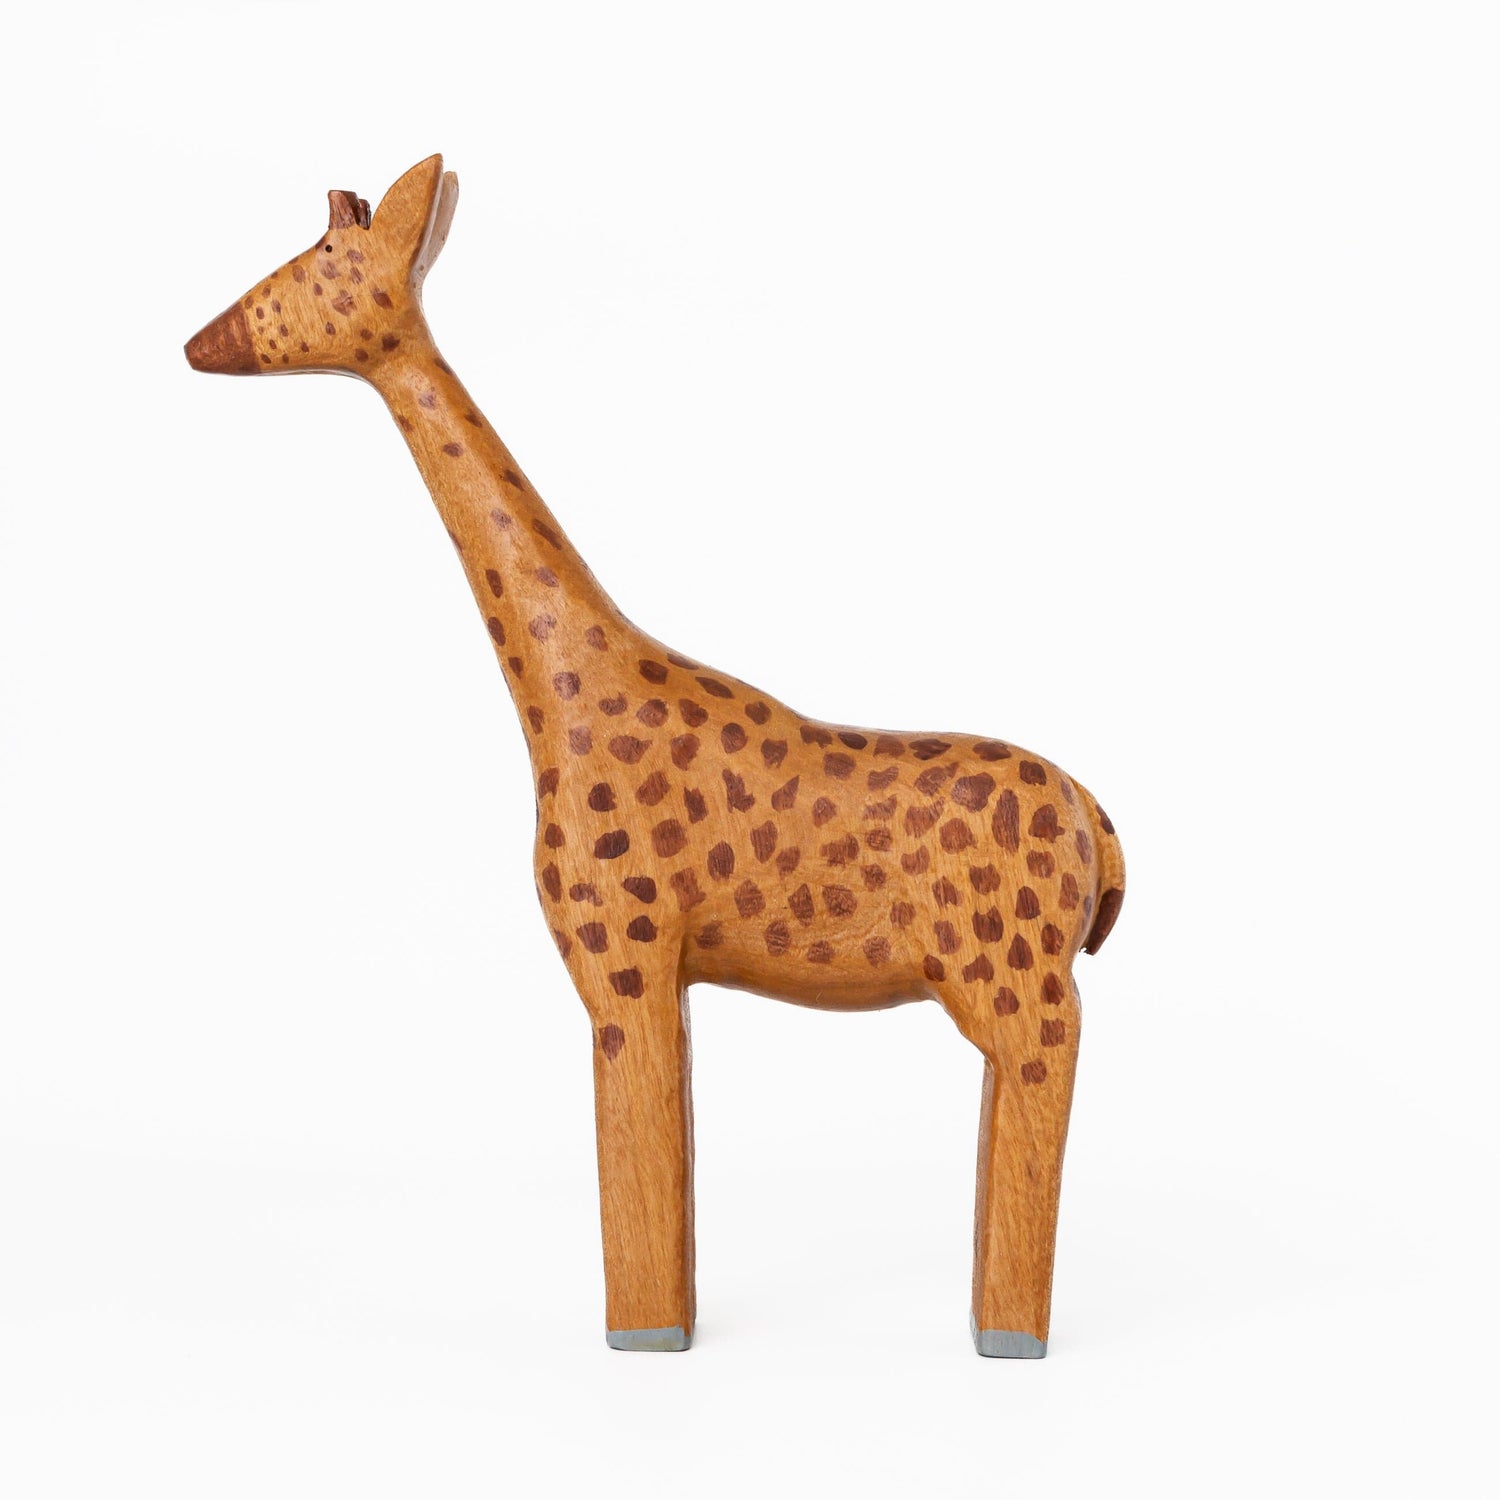 Bumbleberry Toys Wooden Animals "Georgia Giraffe" Wooden Animal Toy (Handmade in Canada)